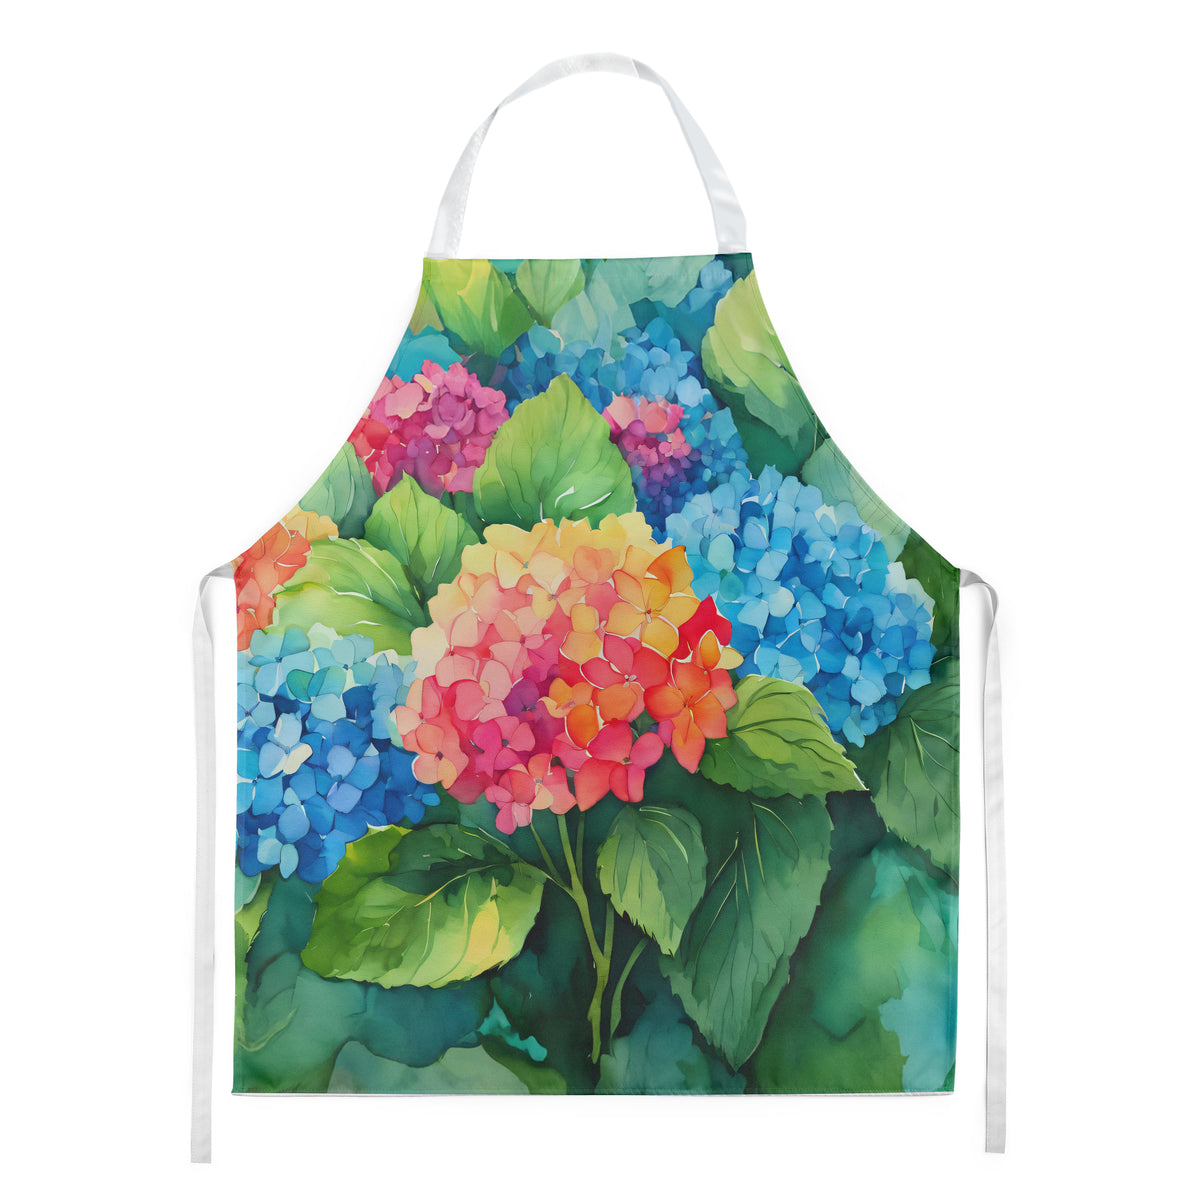 Buy this Hydrangeas in Watercolor Apron